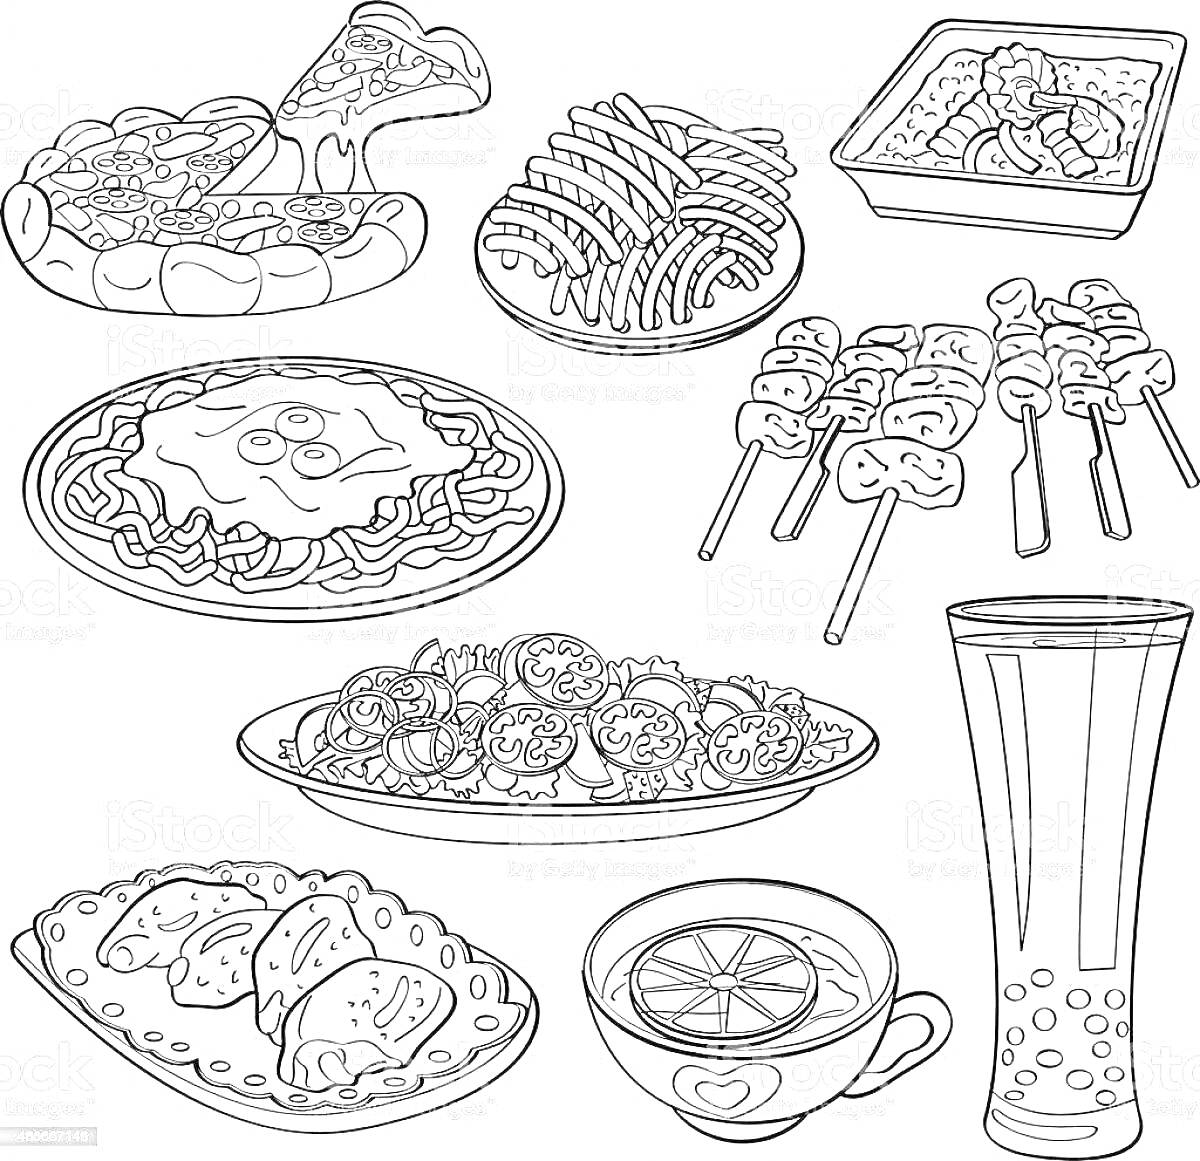 На раскраске изображено: Пицца, Суши, Лапша, Овощи, Чай, Напиток, Яйца, Десерты, Закуски